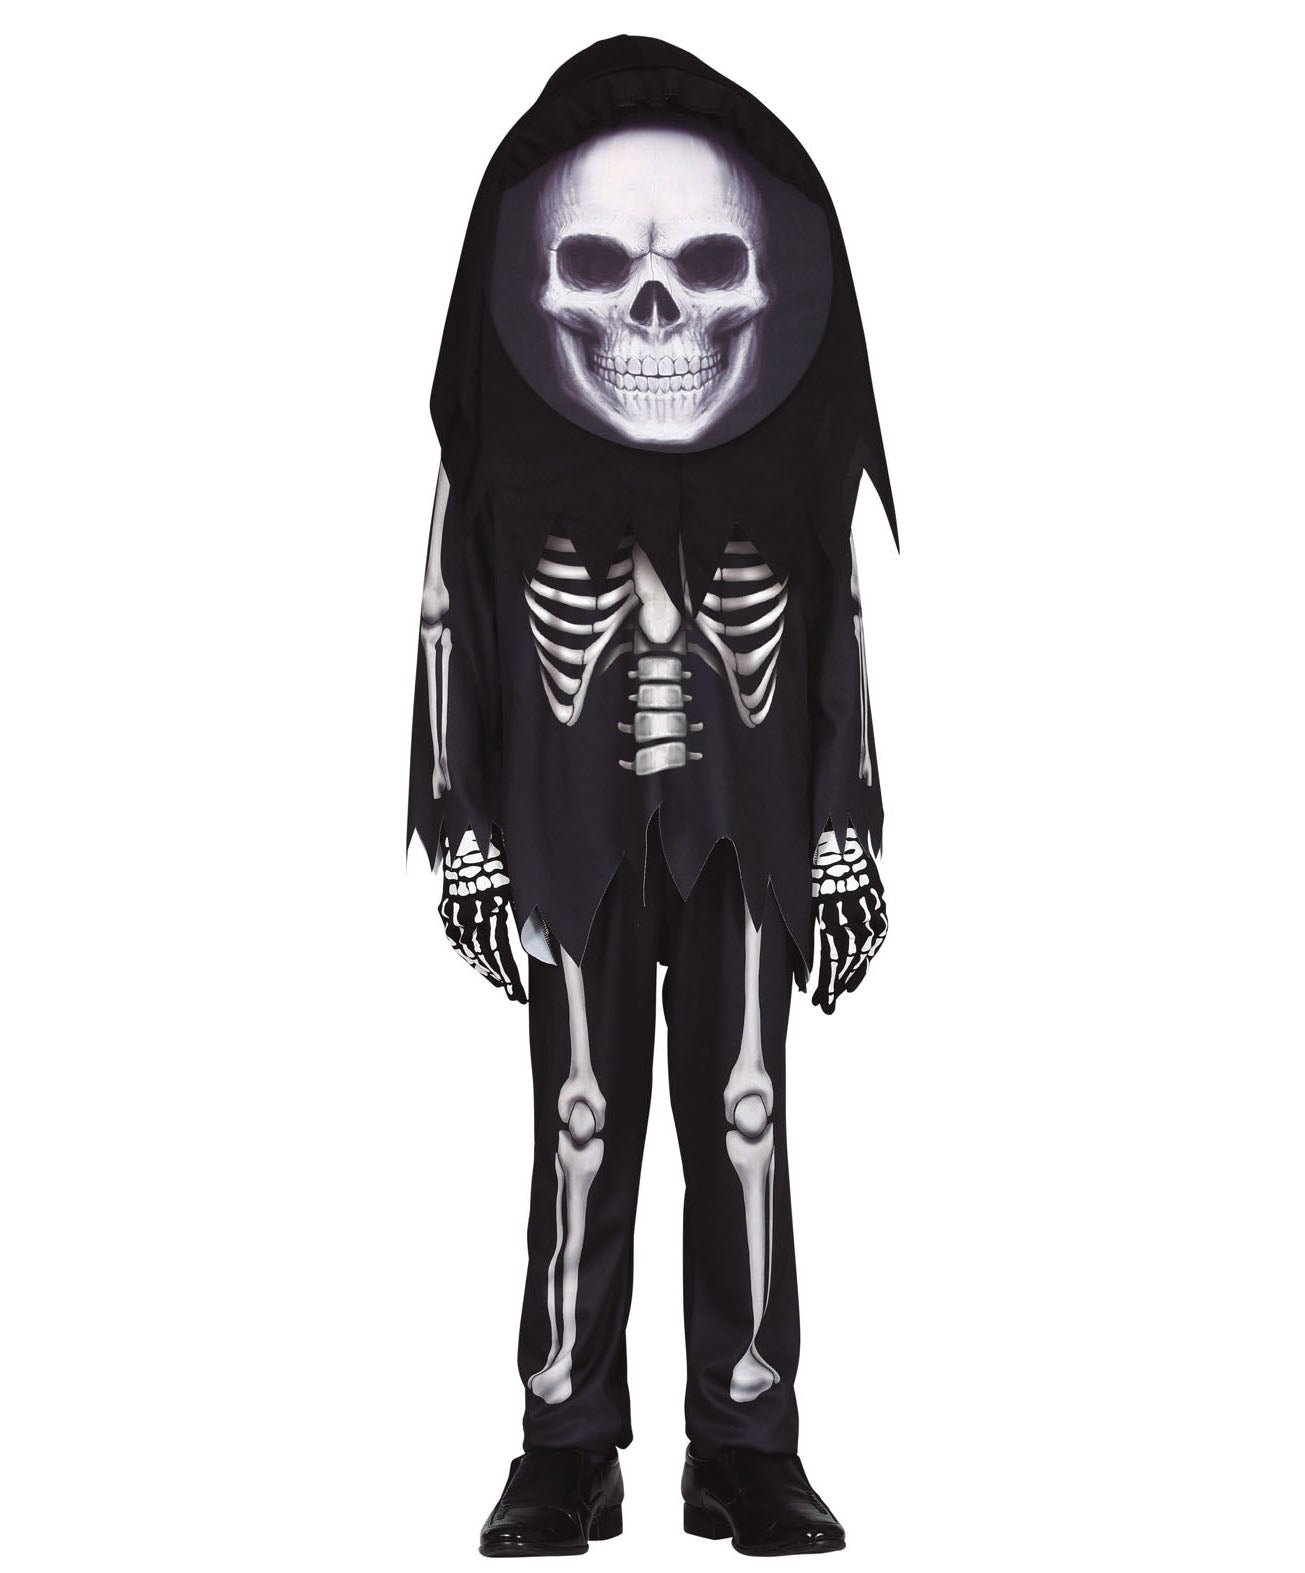 Bad Skeleton Costume